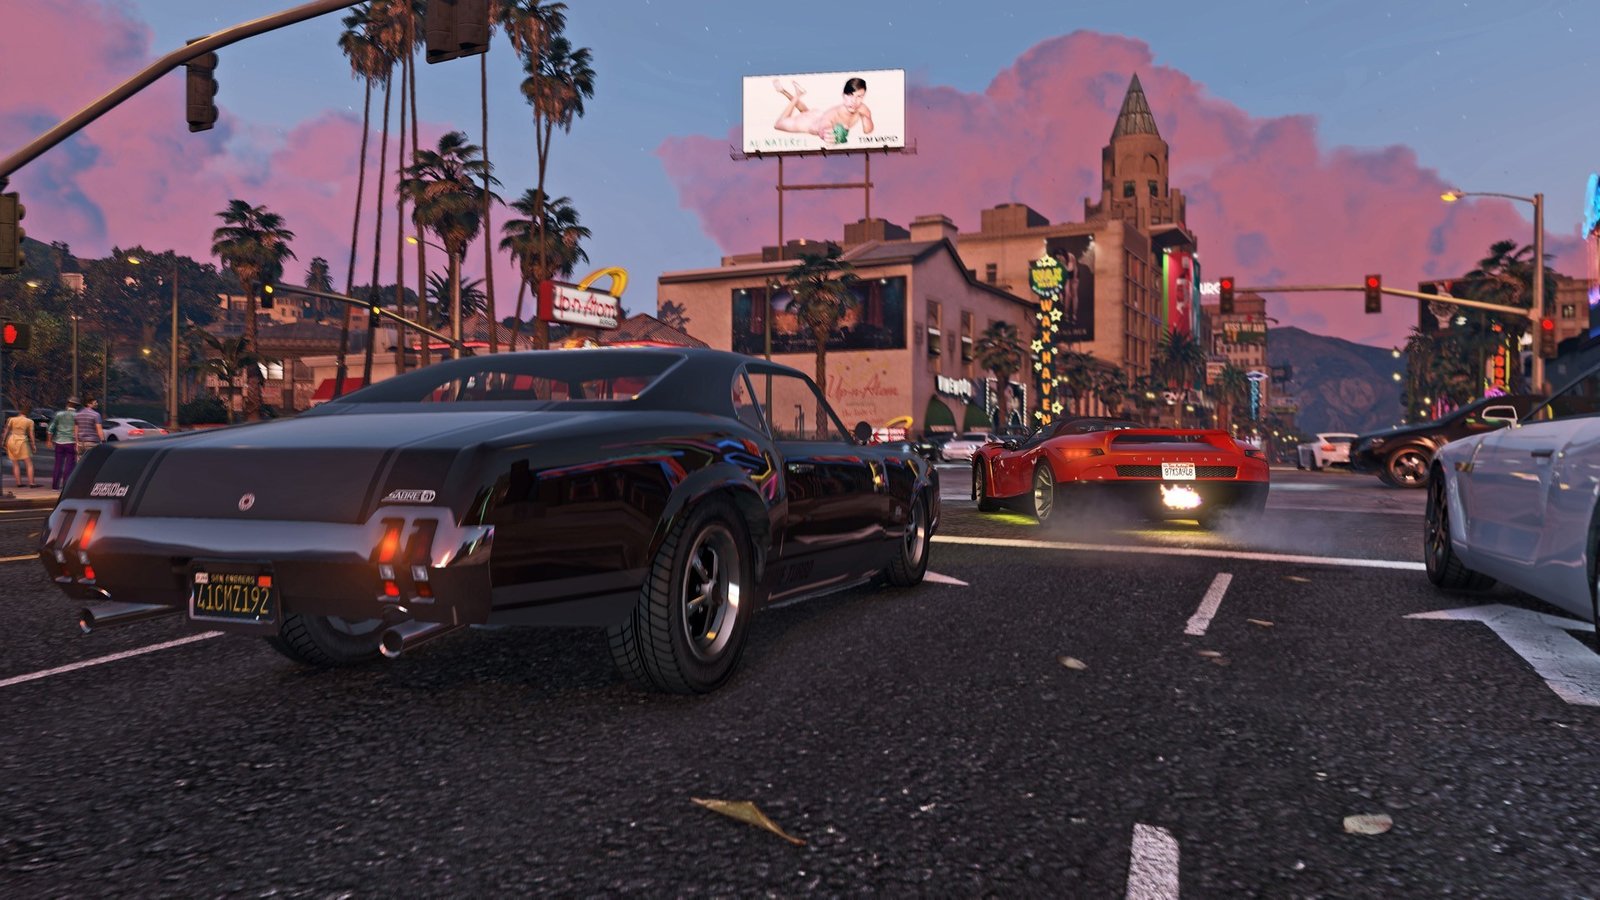 Grand Theft Auto V / GTA 5 Premium Edition - Rockstar Games Key / PC Game 